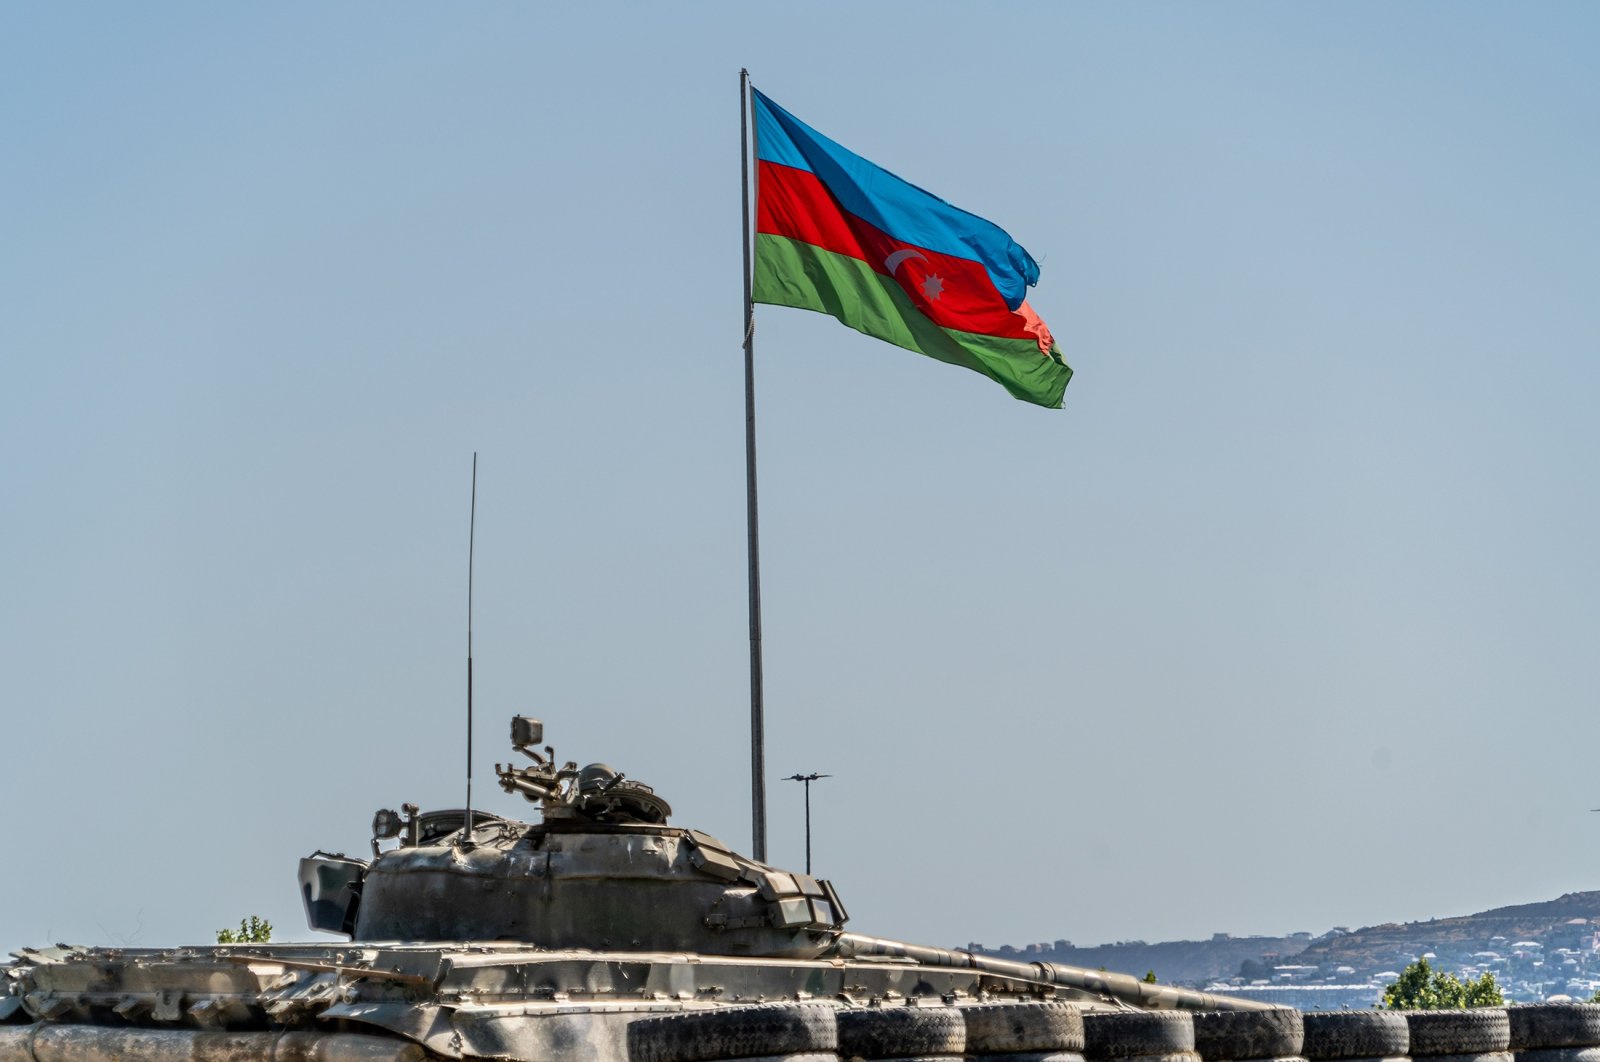 Azerbaijan flag flying above a captured Armenian tank in Trophy Park, Baku, Azerbaijan, June 16, 2021 (Getty Images)